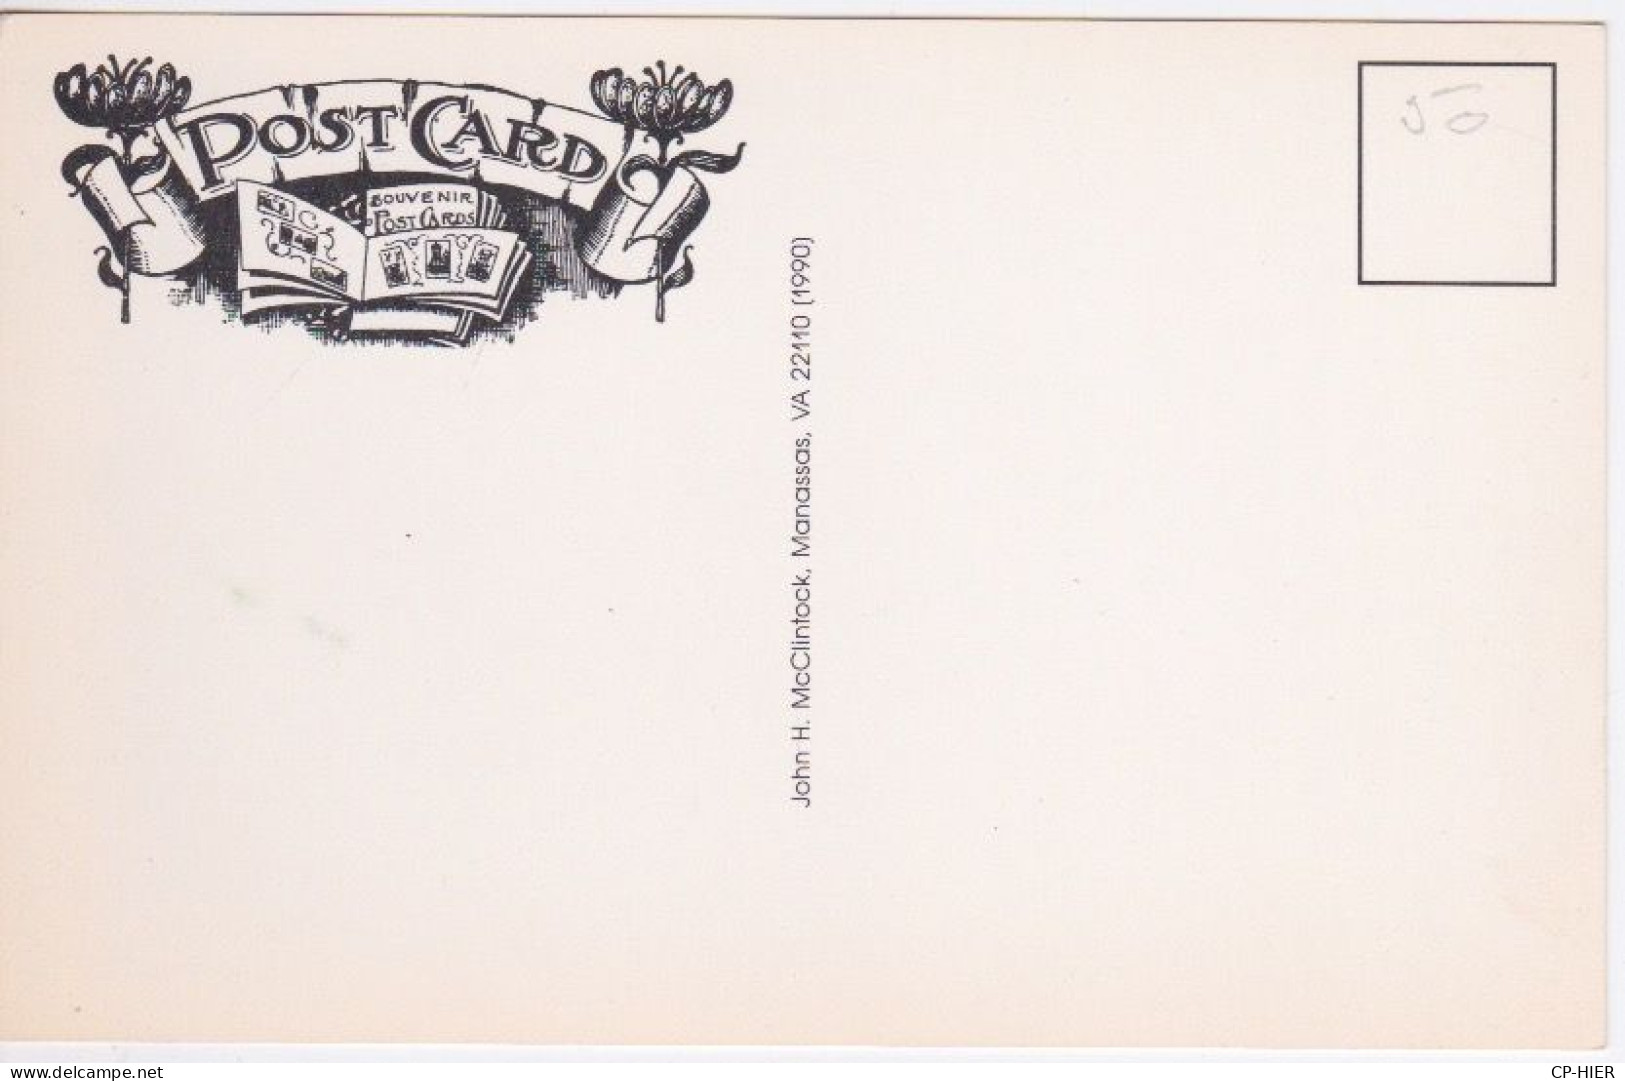 CARTE DE SALON 1991 - POST CARD -  PA  Etats-Unis-Pennsylvania - HUMOUR BICYCLETTE - Collector Fairs & Bourses